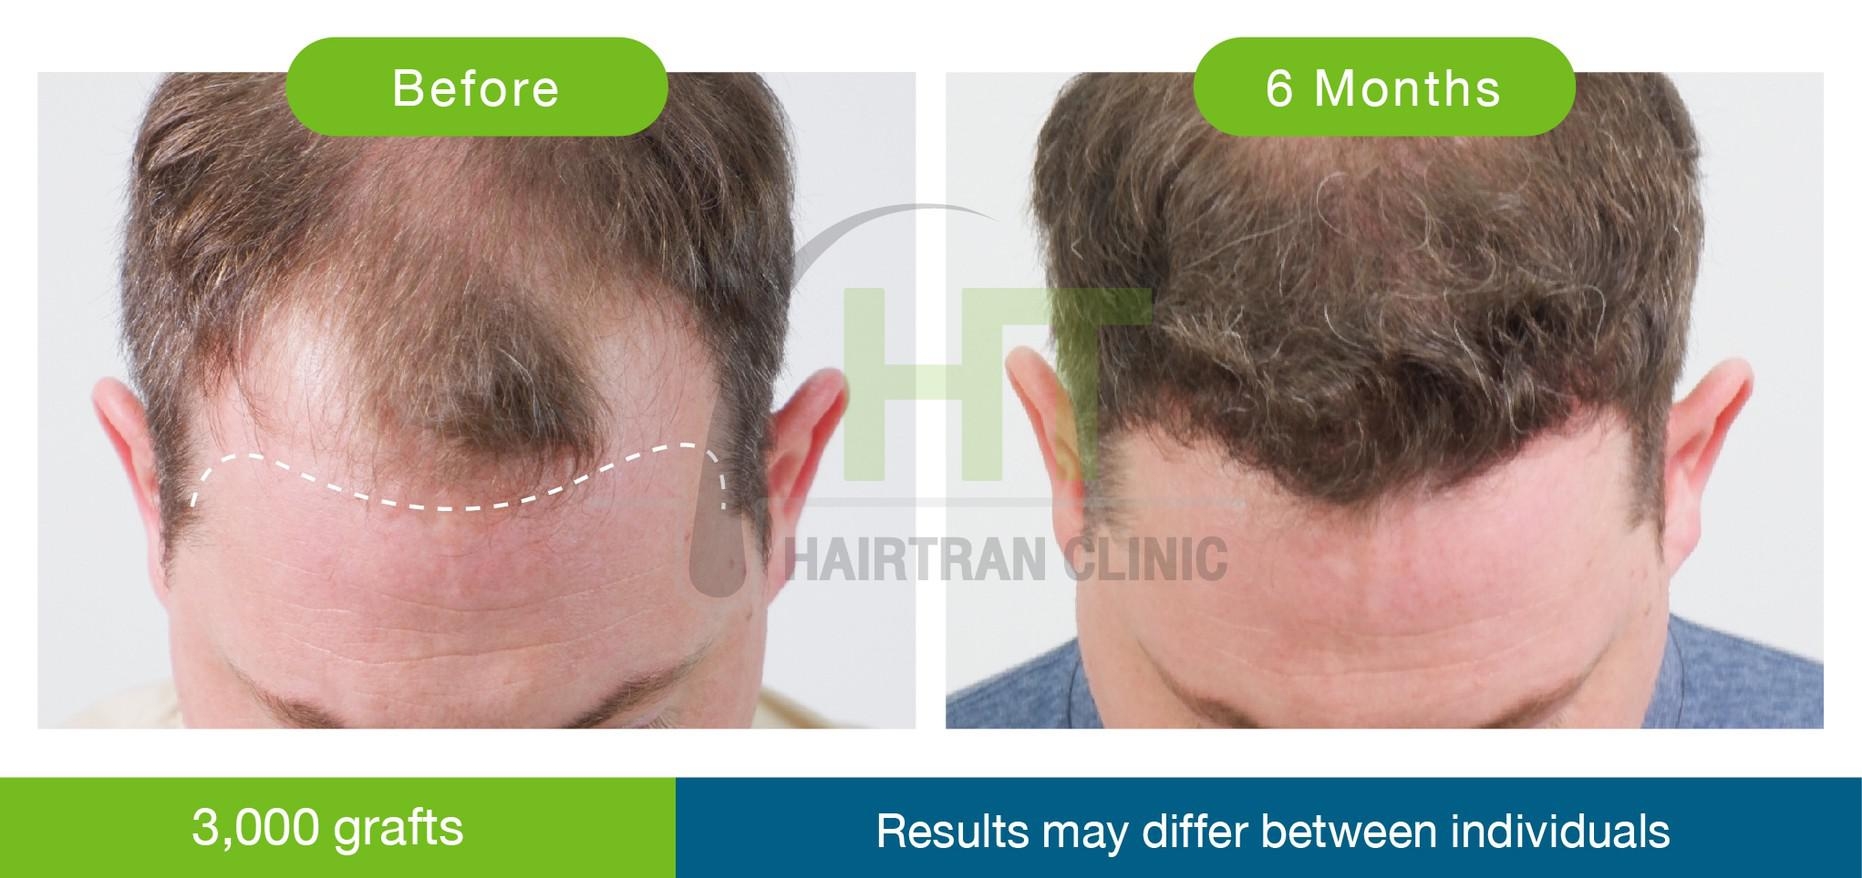 Taking hair growth medicine after a hair transplant - Hairtran Clinic